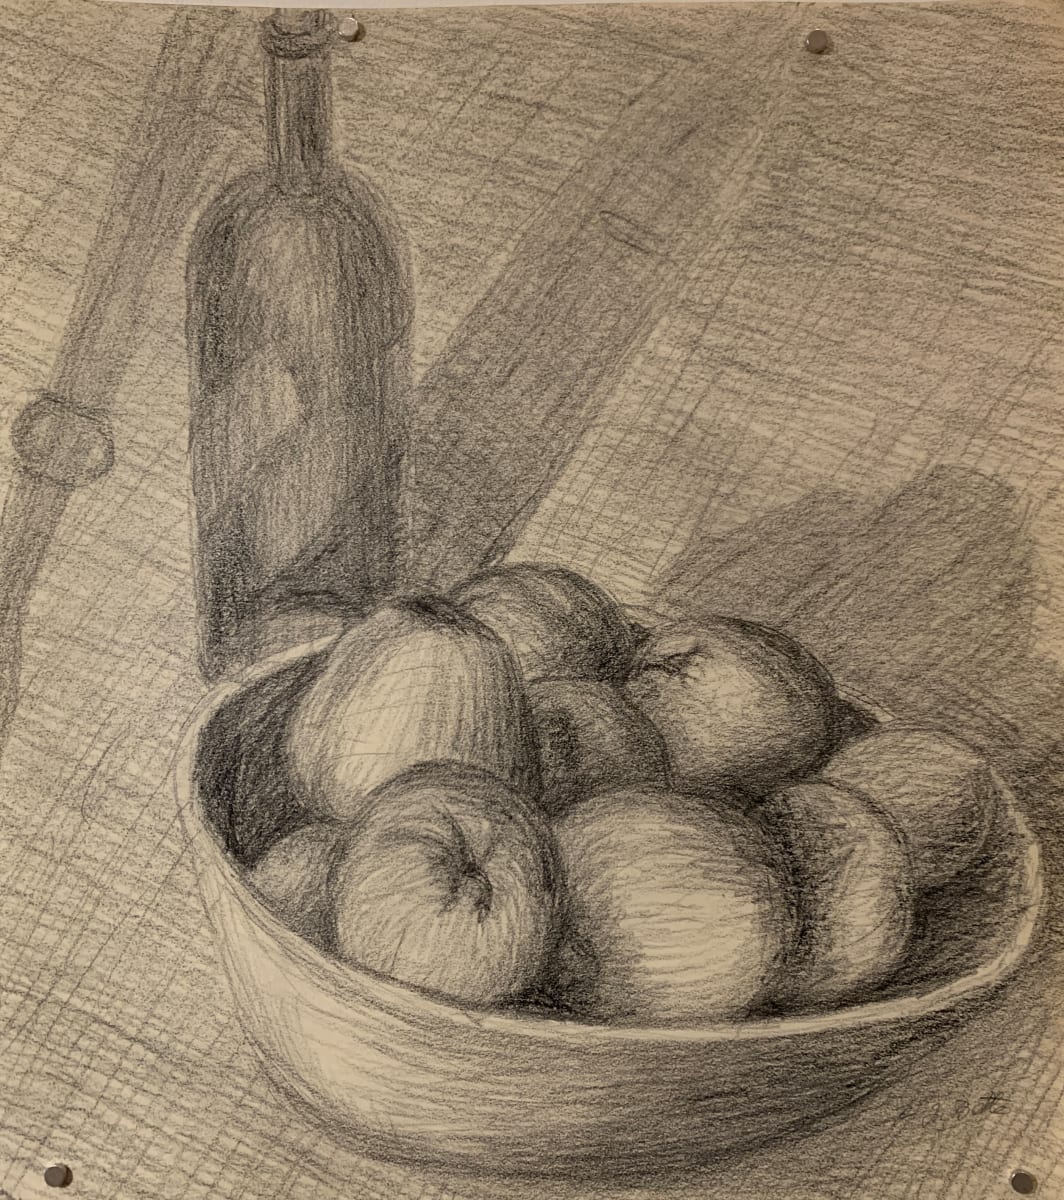 Crosshatch Drawing Still of Apples by Frank J Bette 